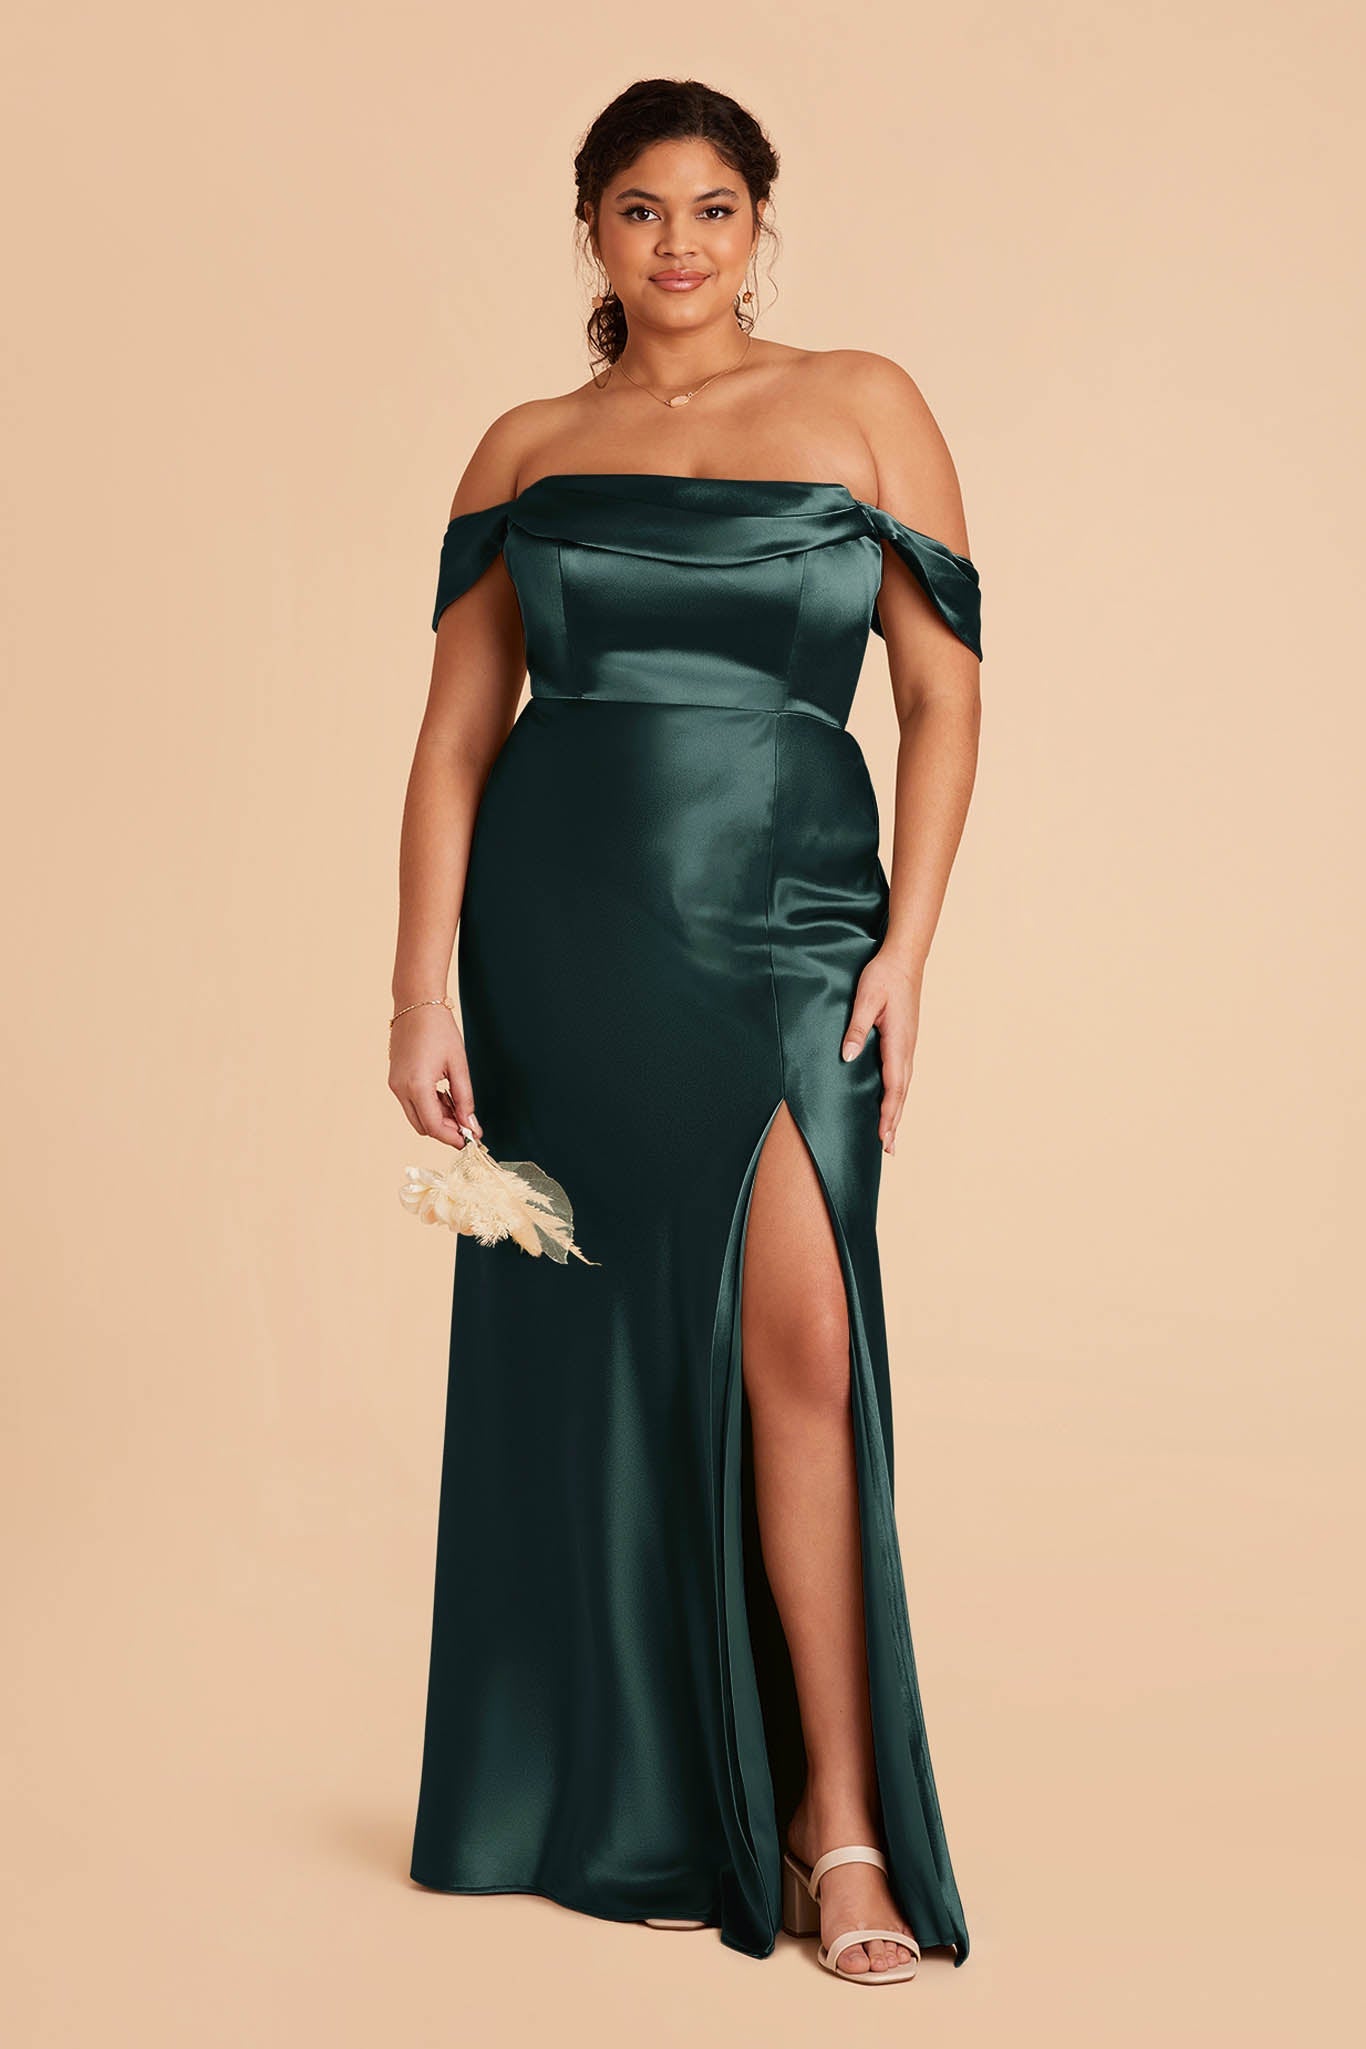 Emerald Mia Convertible Dress by Birdy Grey